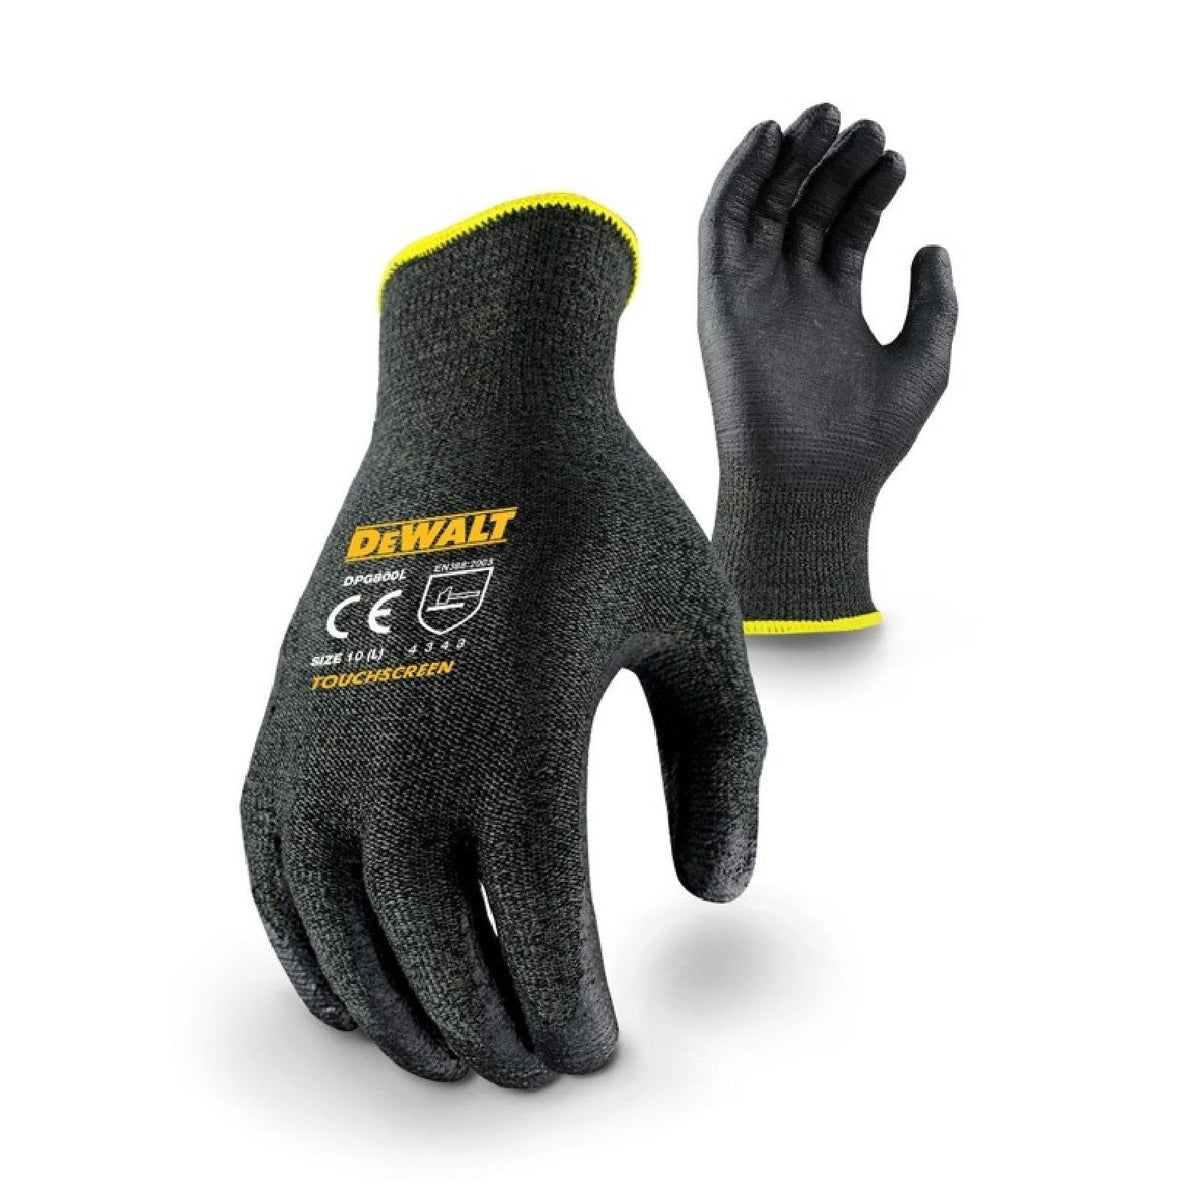 Dewalt DPG800L Touchscreen Hppe Glove - black - Size Itm (29725-50506-01)